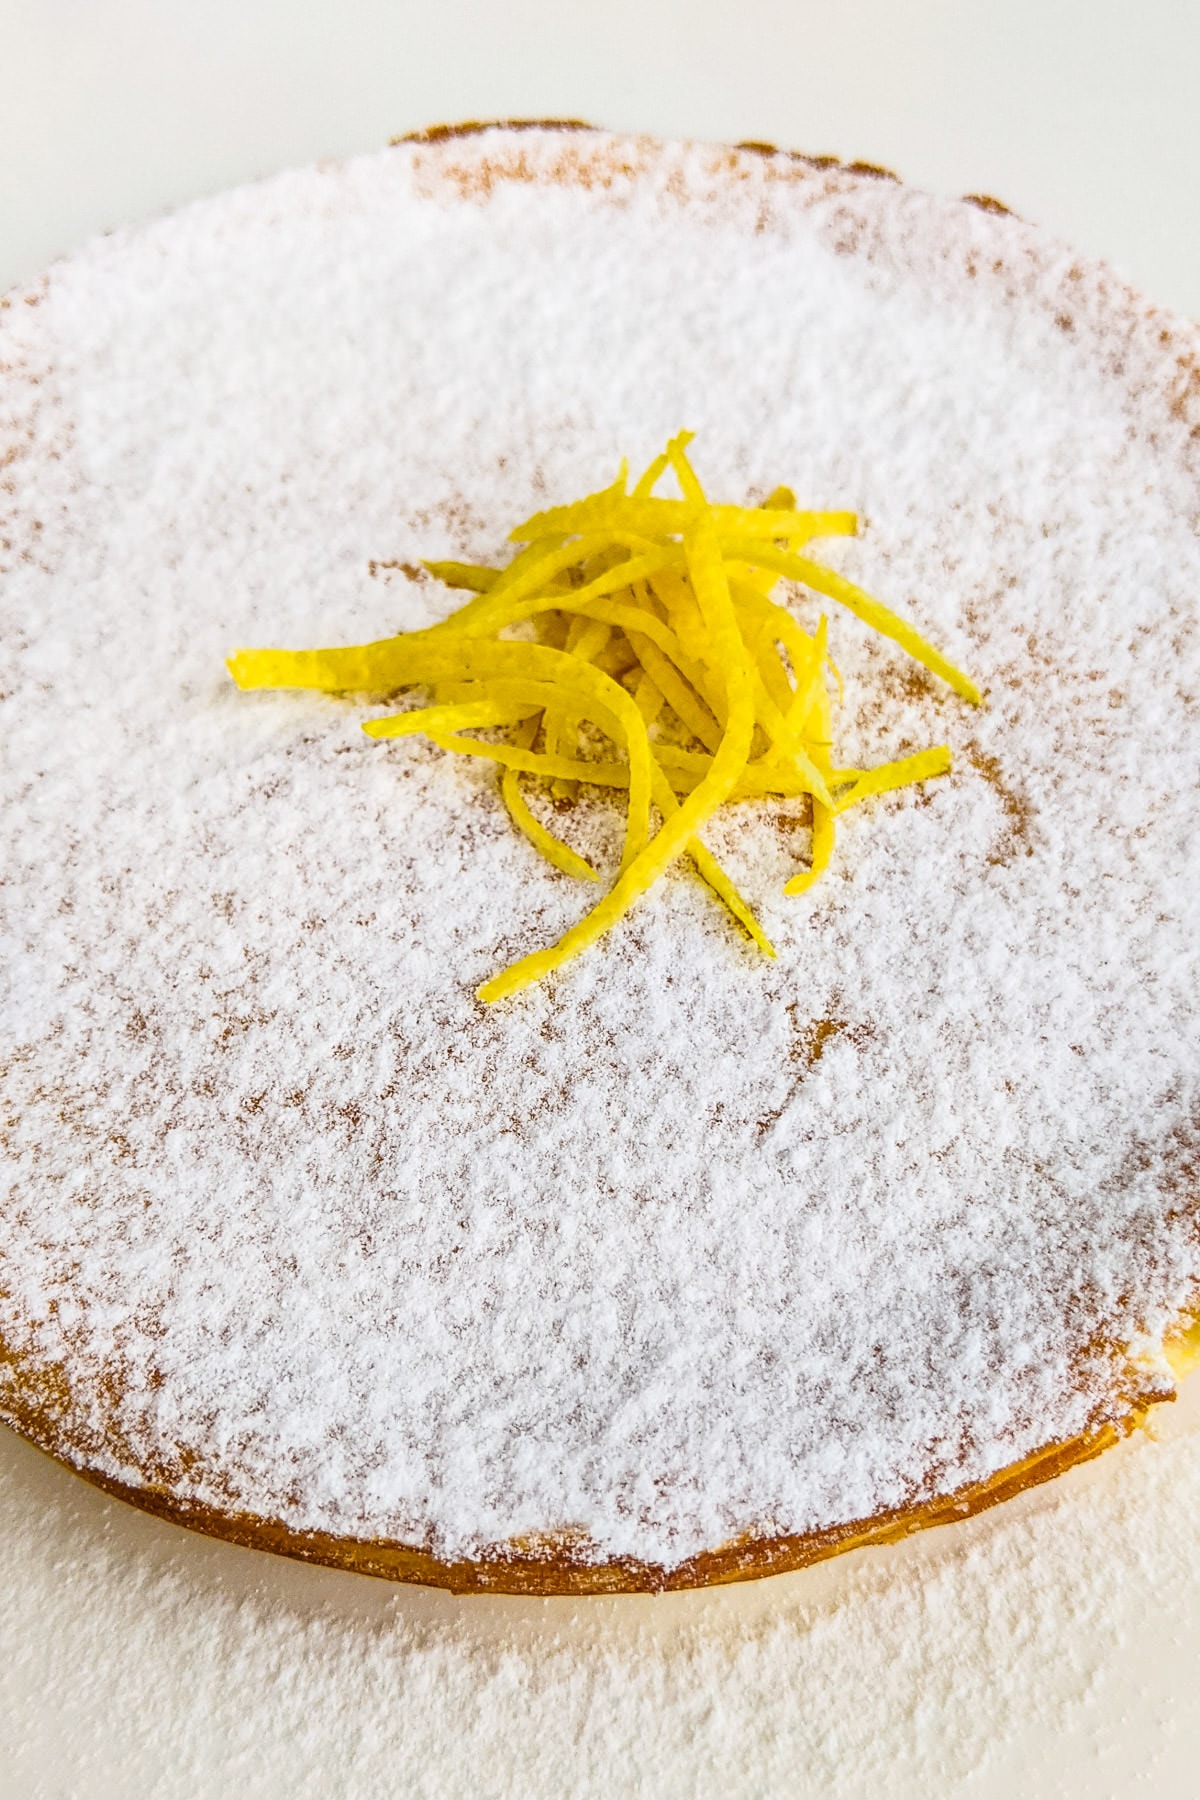 Ricotta cheese cake decorated with powdered sugar